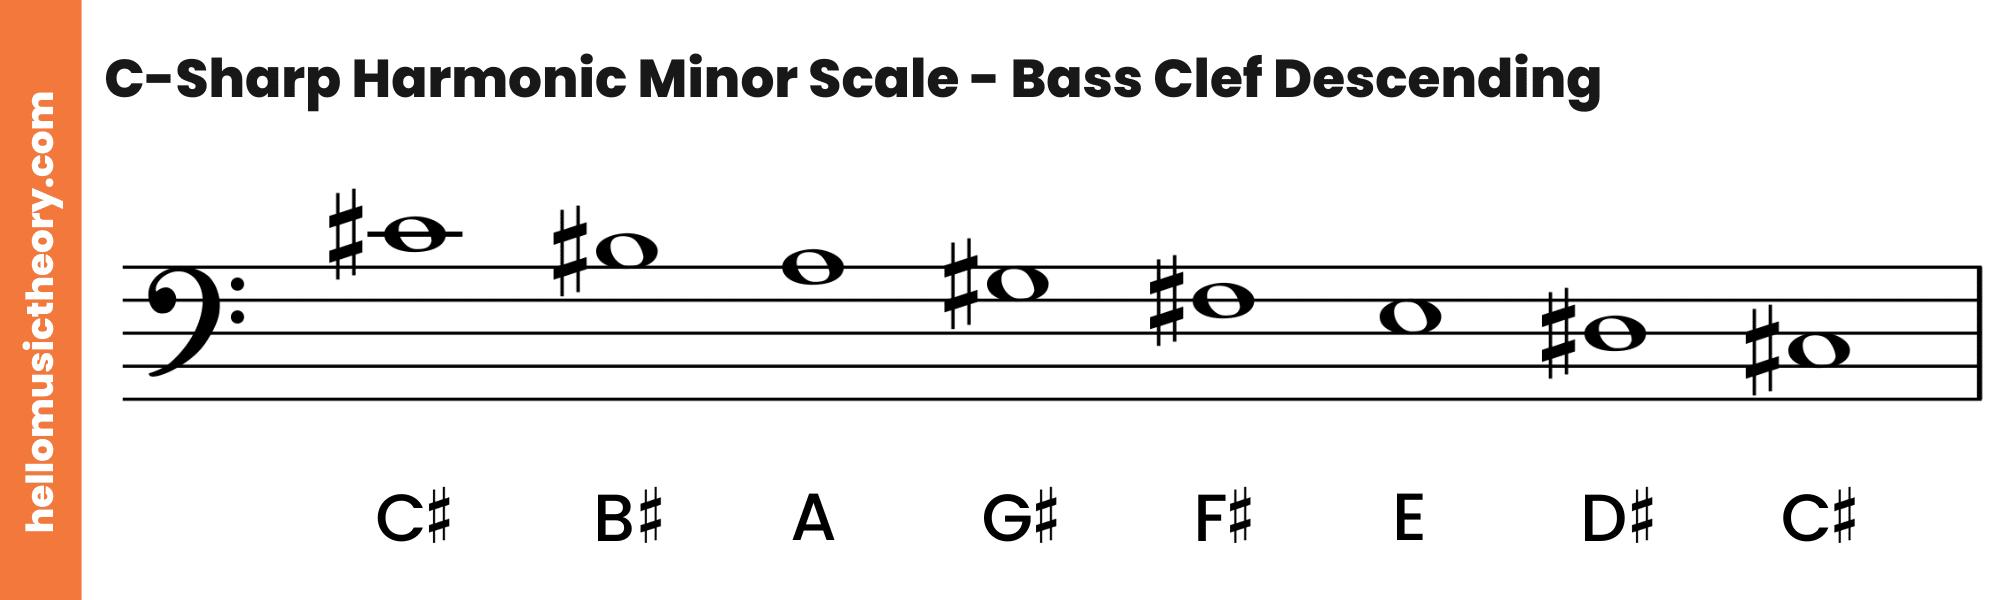 C-Sharp Harmonic Minor Scale Bass Clef Descending